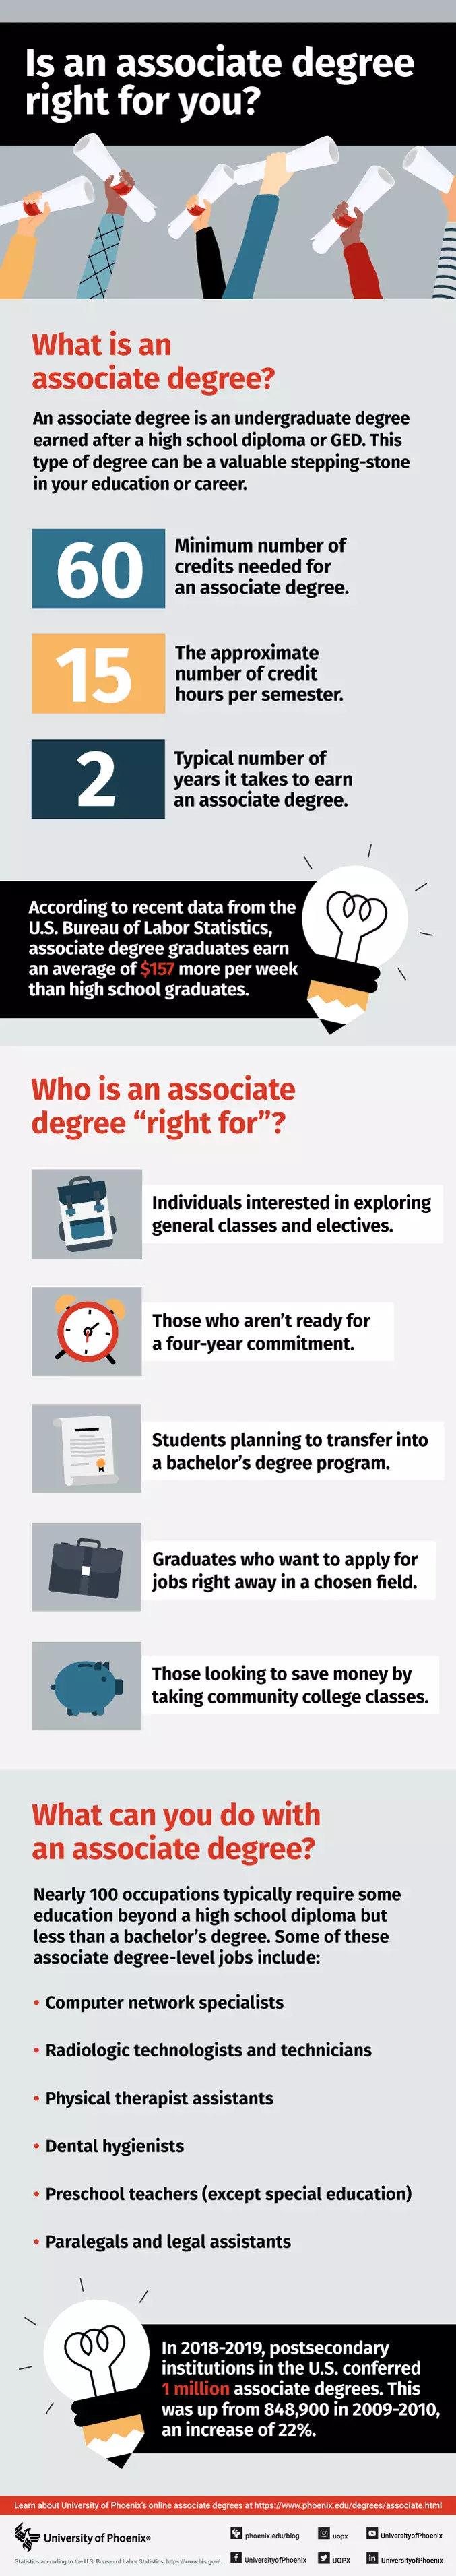 Associate degree infographic